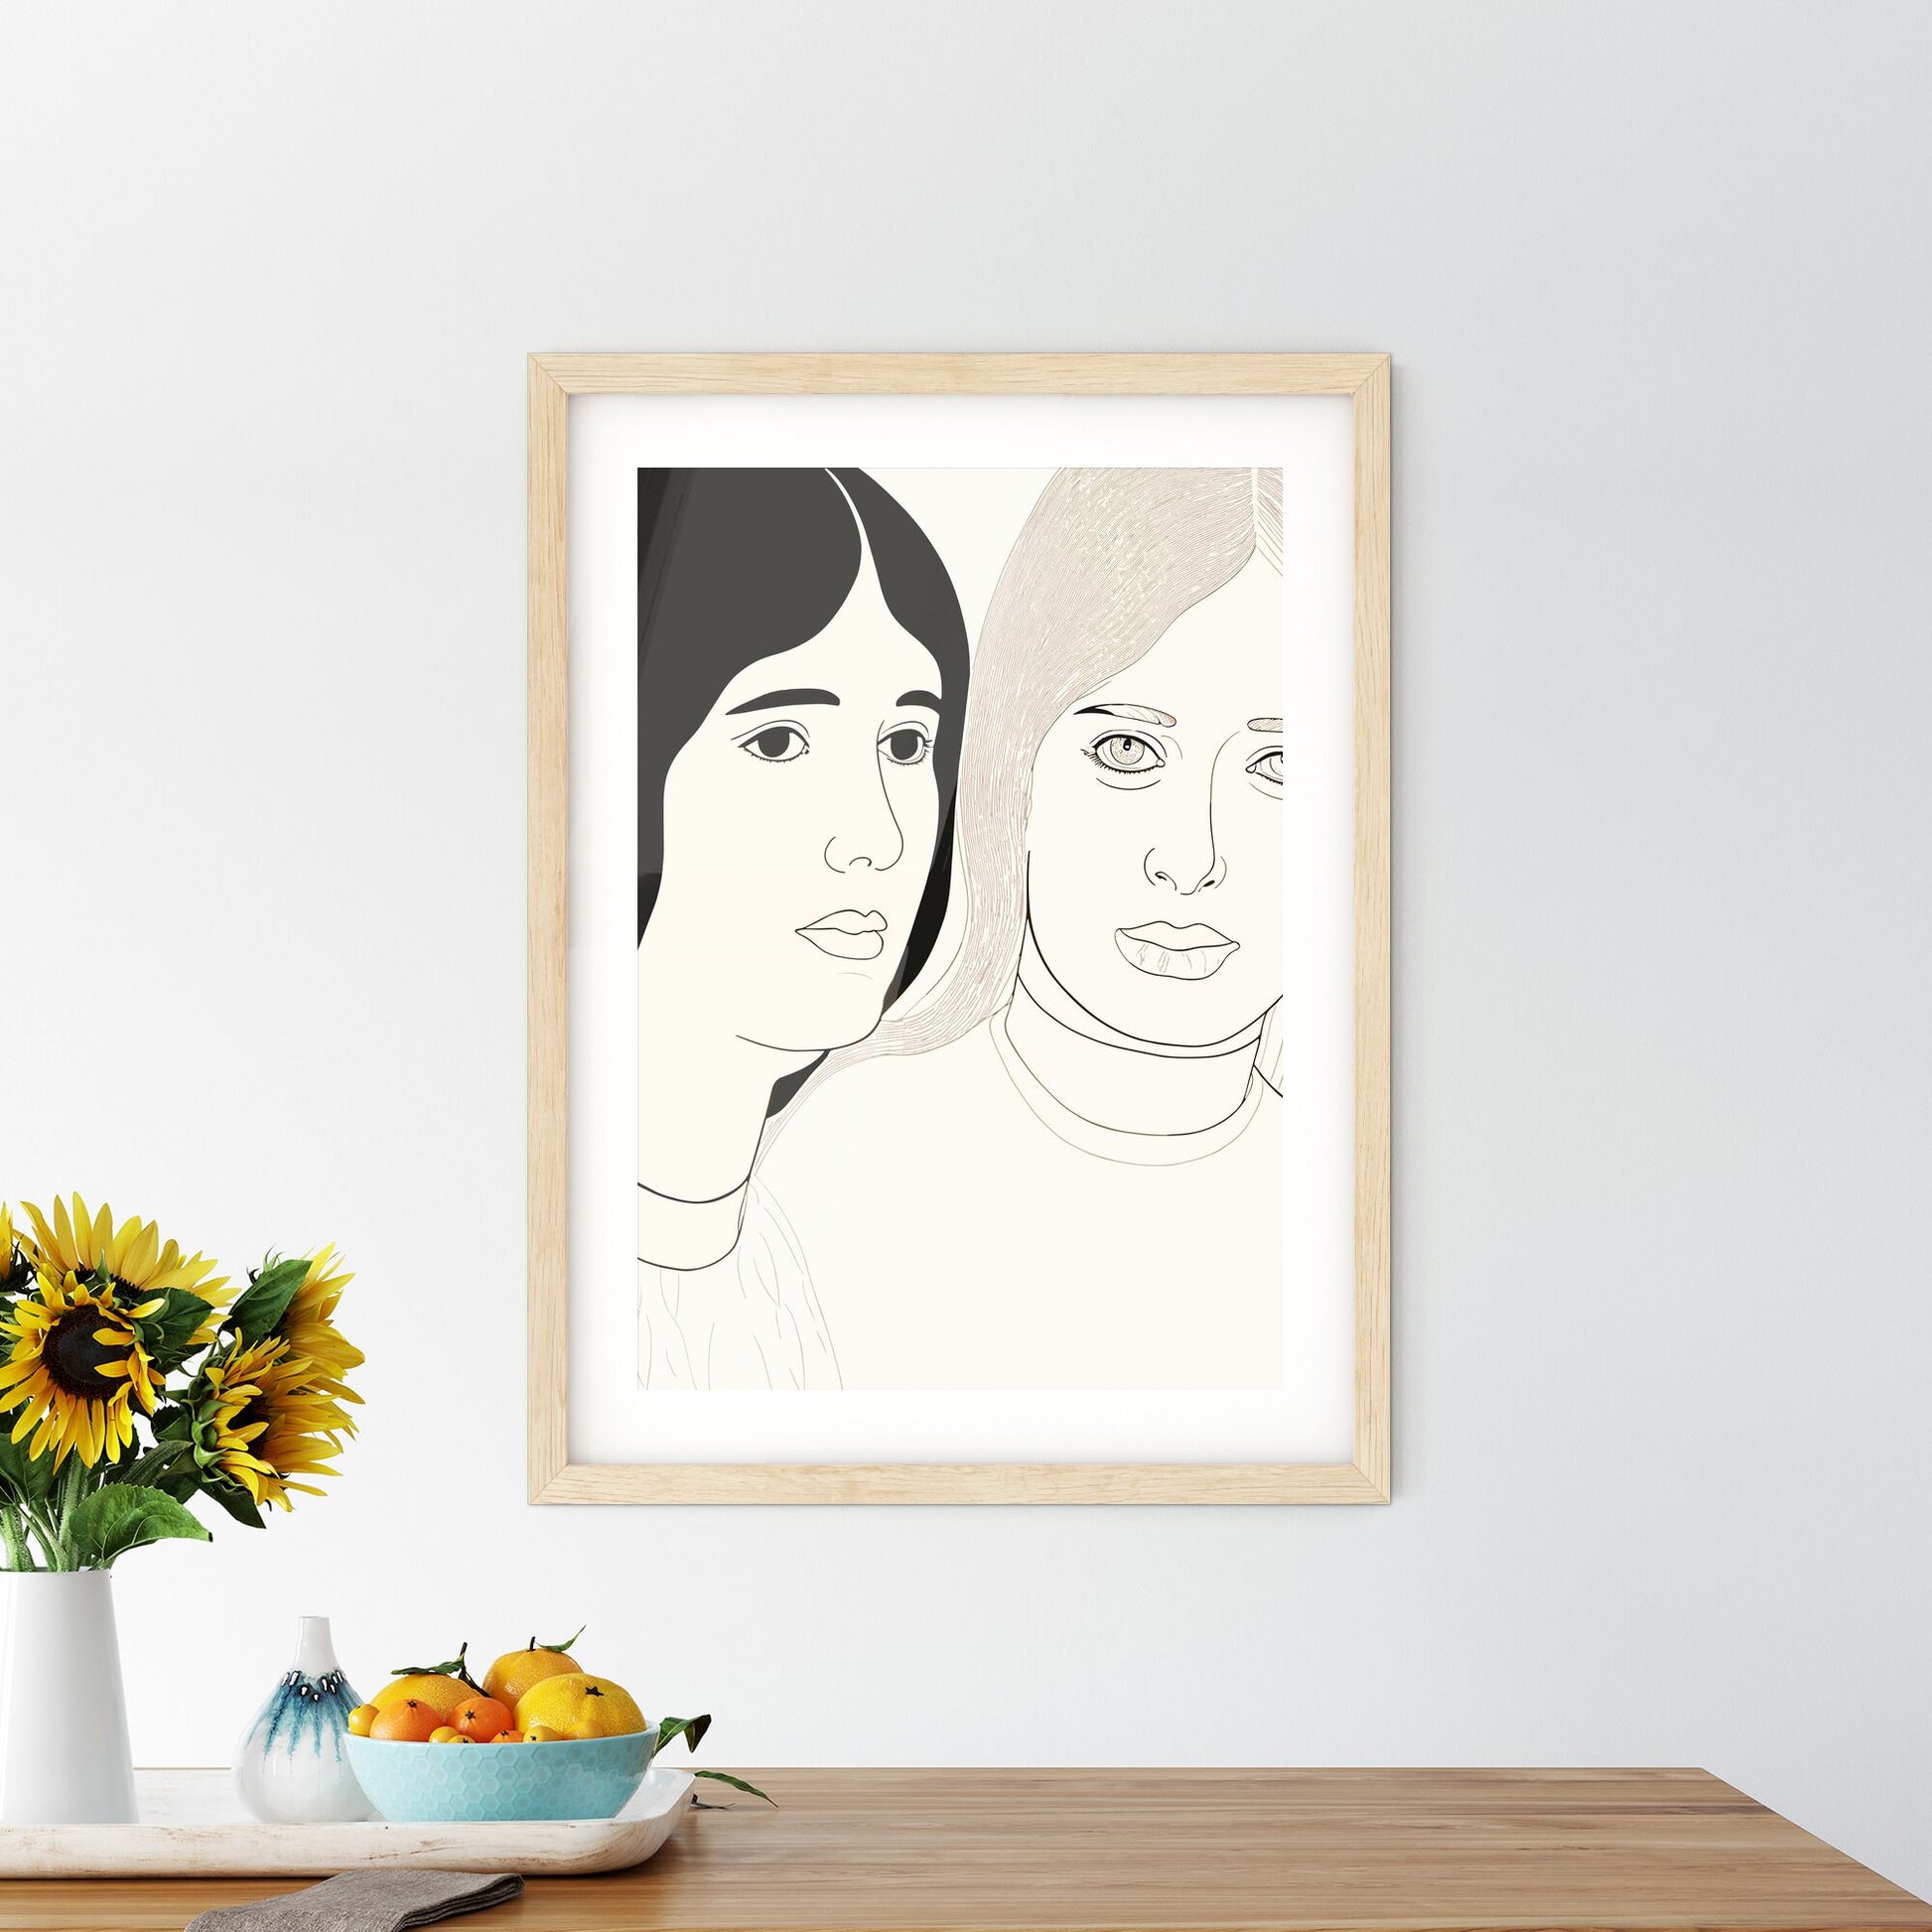 60S Advertising Gossip Scene Of Two Women - A Drawing Of Two Women Default Title